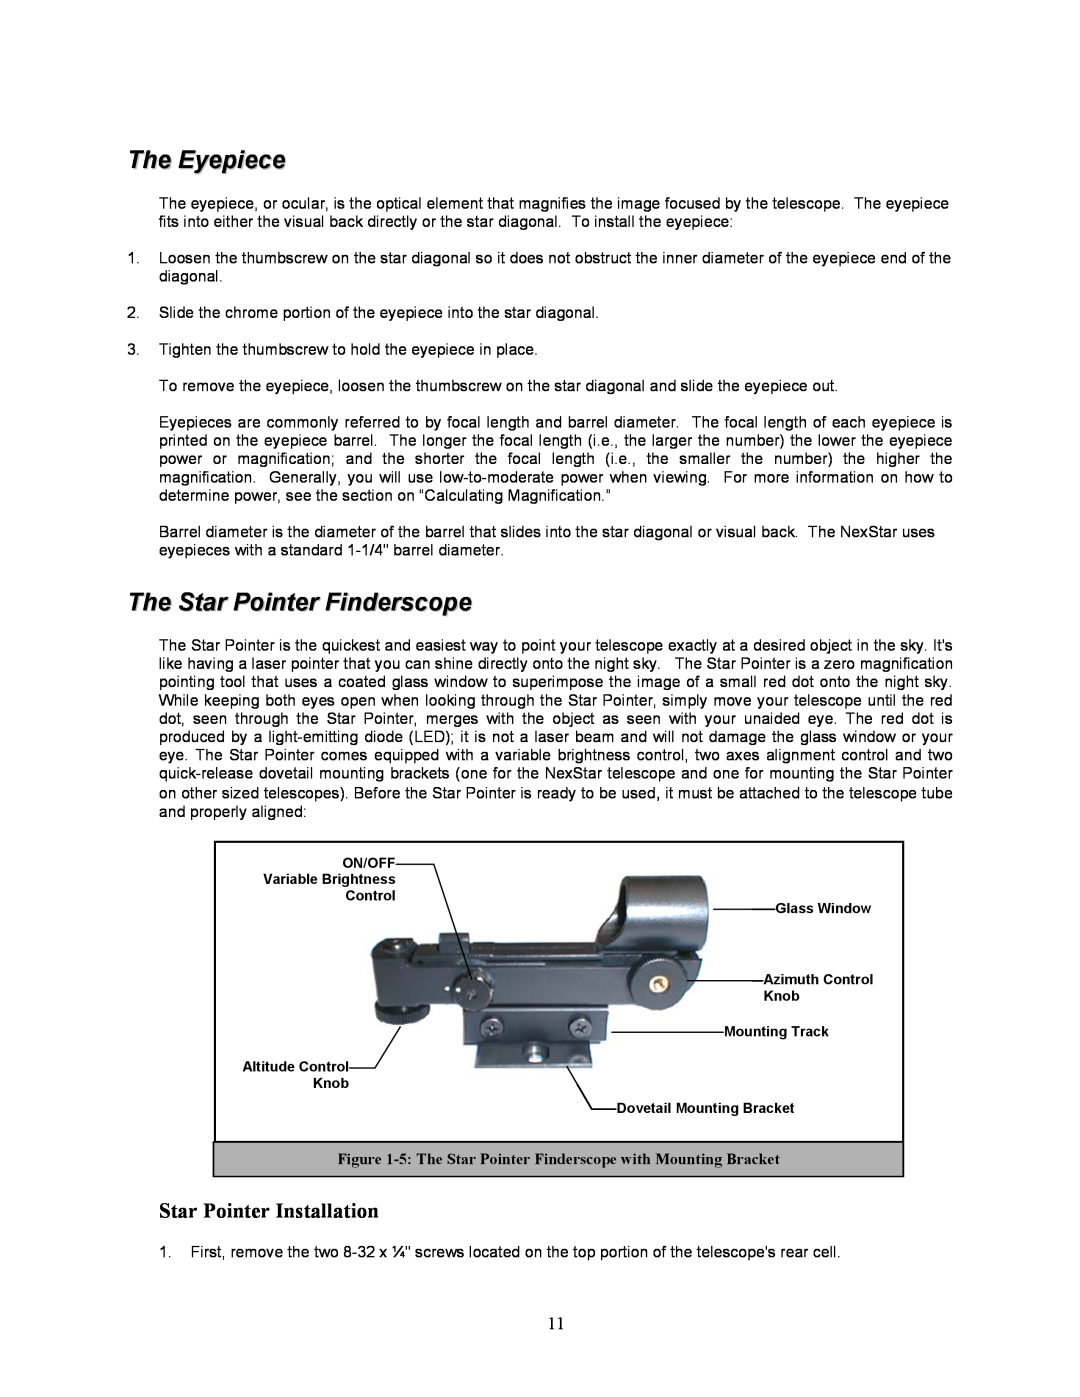 Celestron NexStar 8i manual The Eyepiece, The Star Pointer Finderscope, Star Pointer Installation 